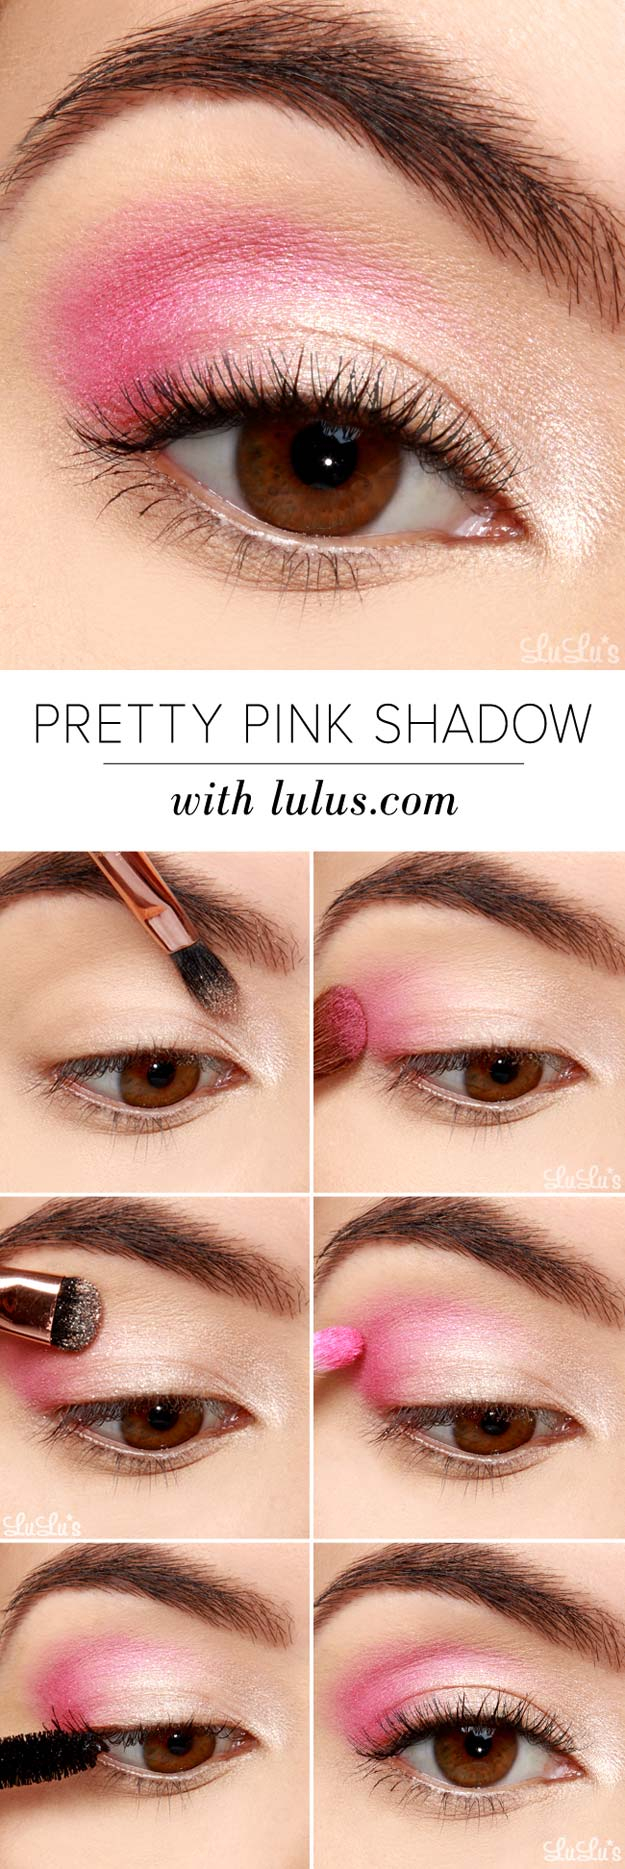 Pink Eye And Makeup 25 Best Eyeshadow Tutorials Ever Created